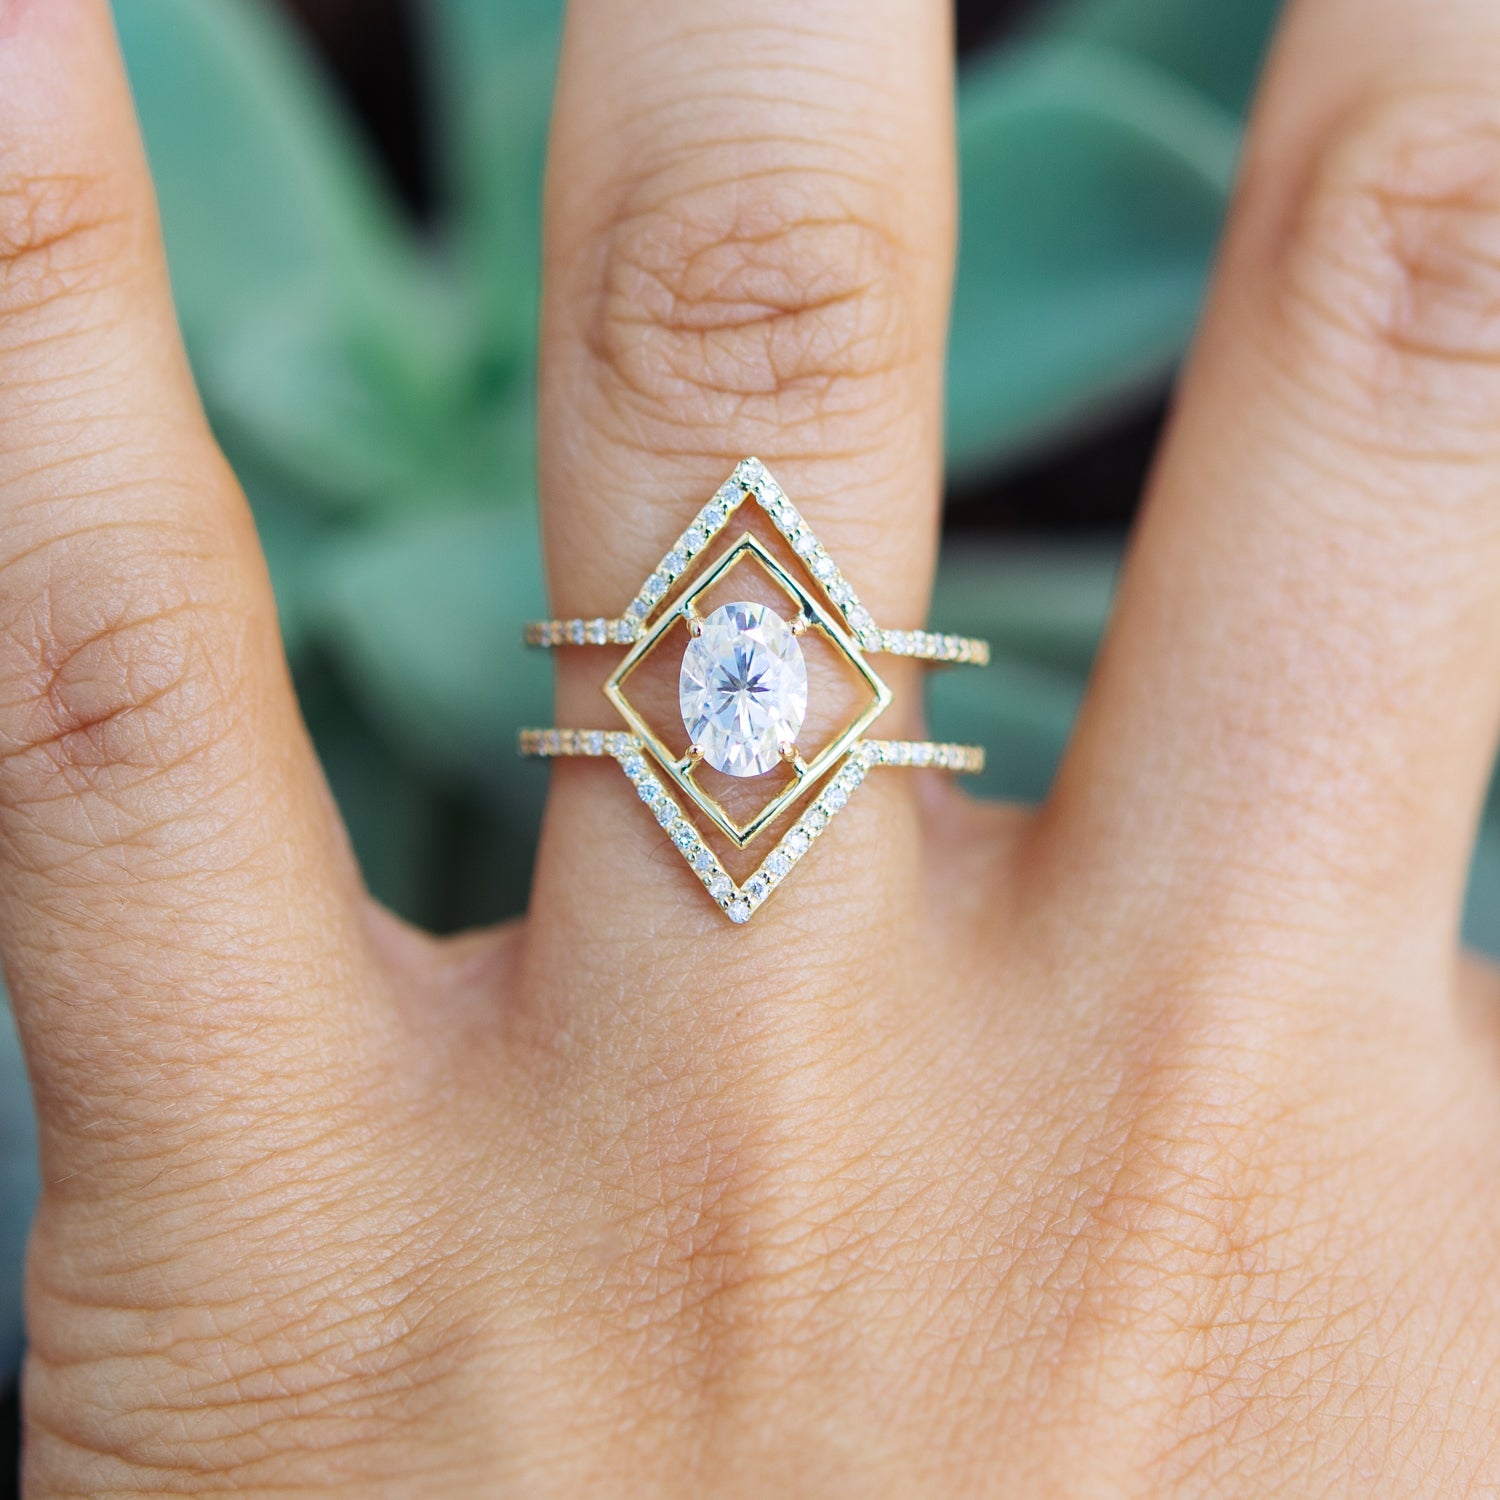 Giacomelli Jewelry ring diamond